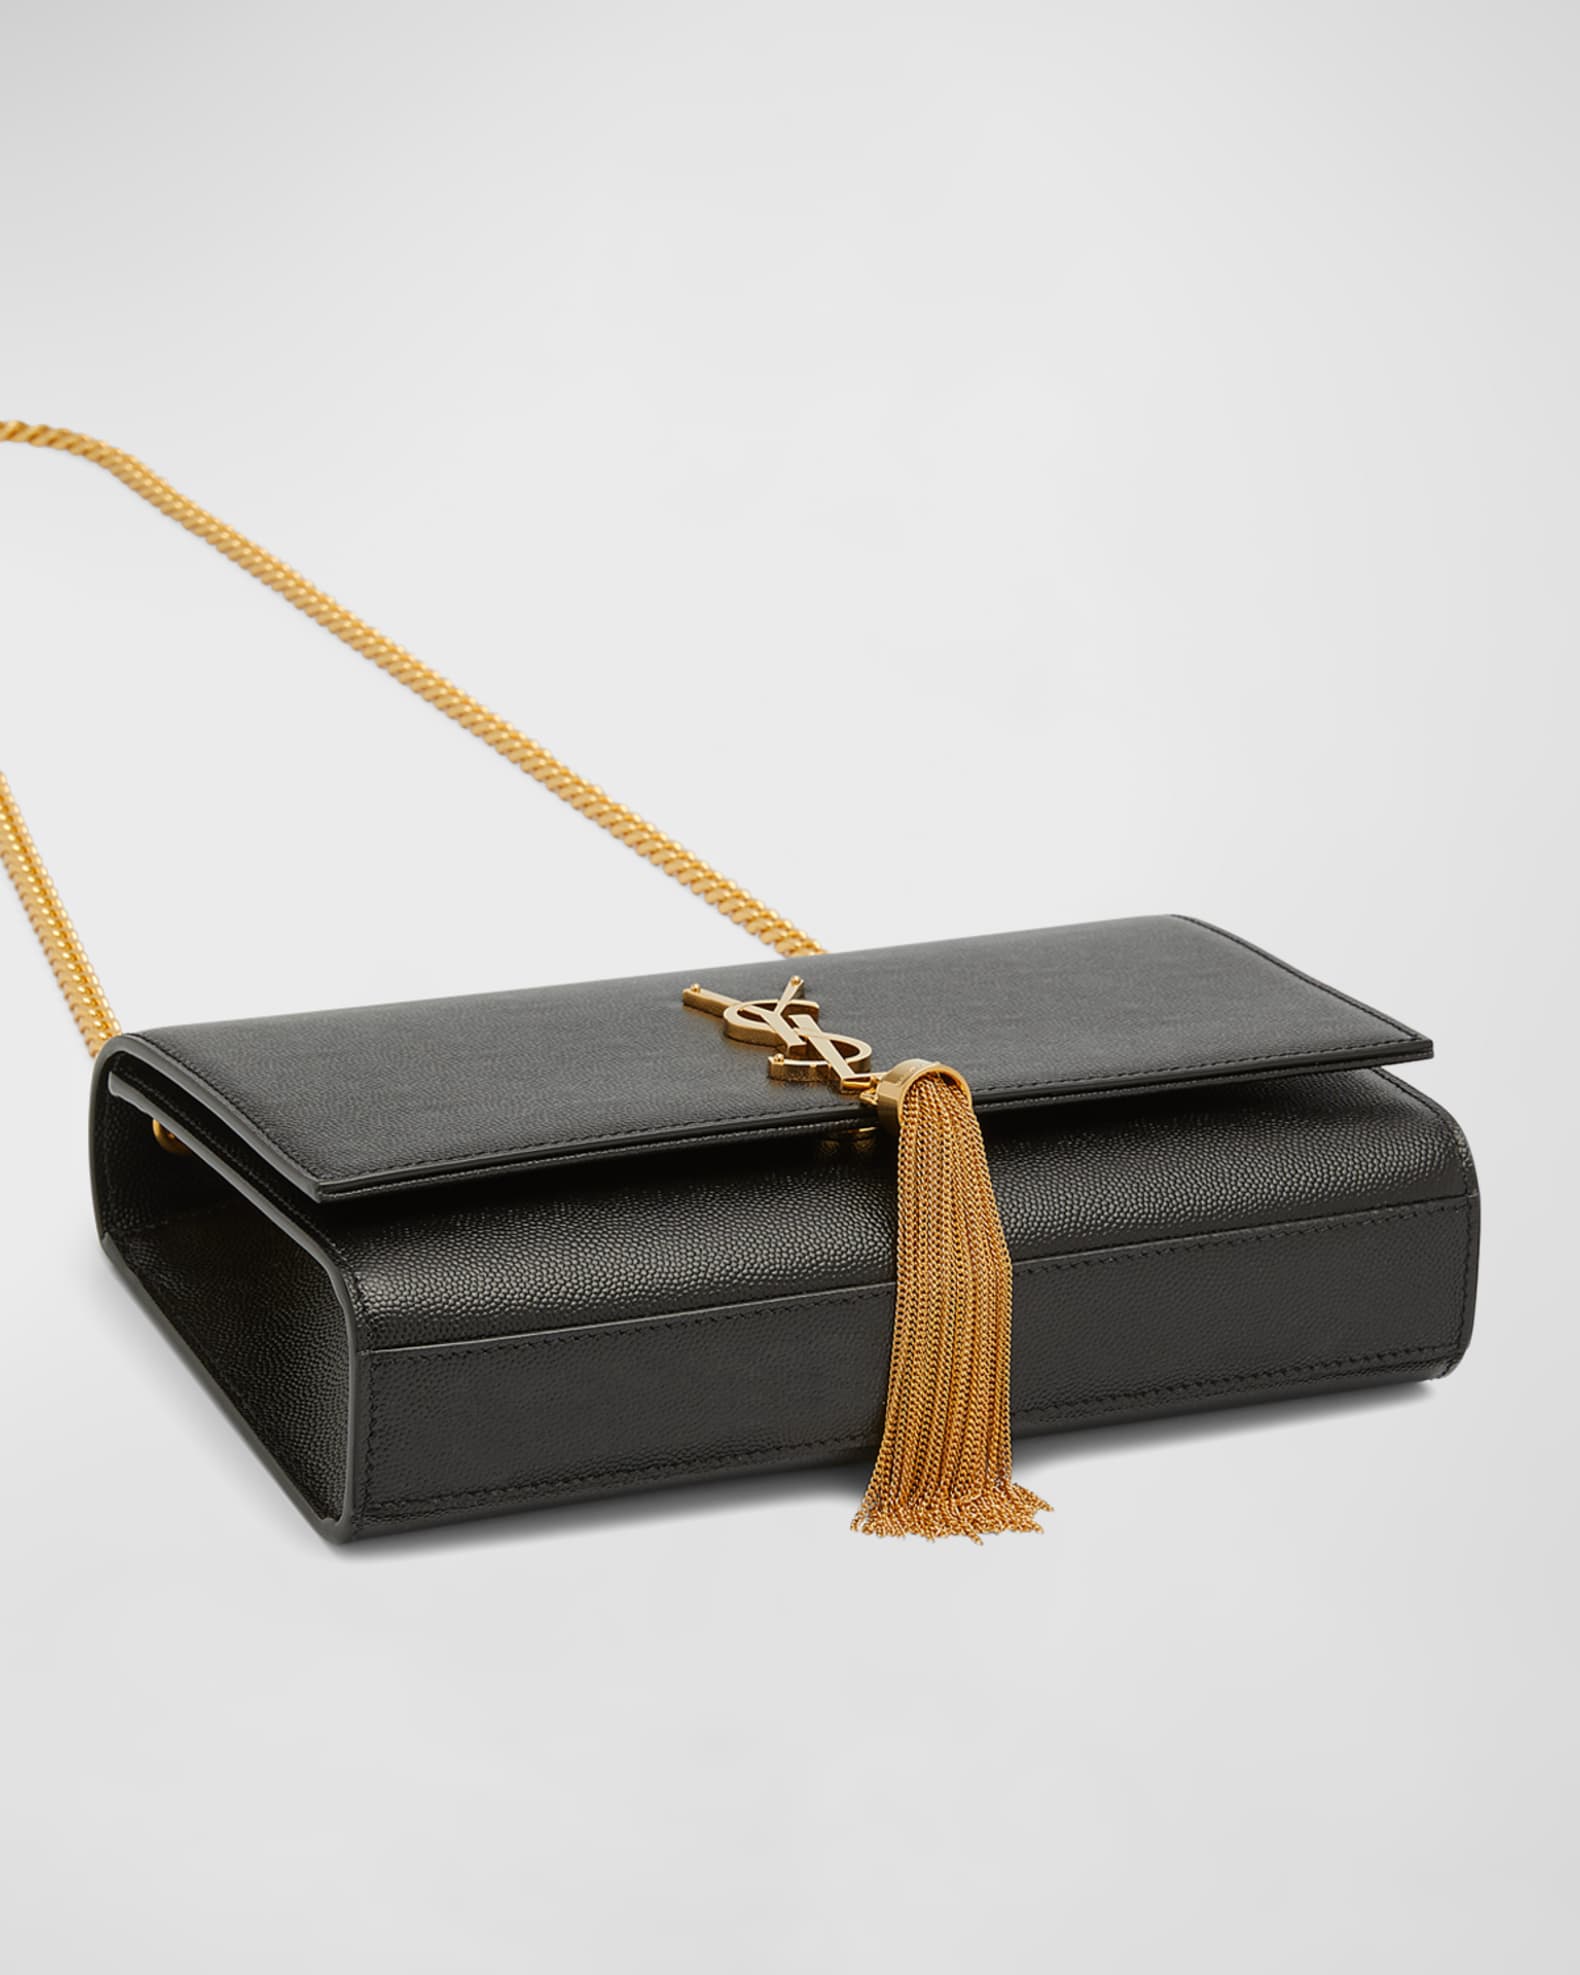 Saint Laurent Kate in Small or Medium? : r/handbags